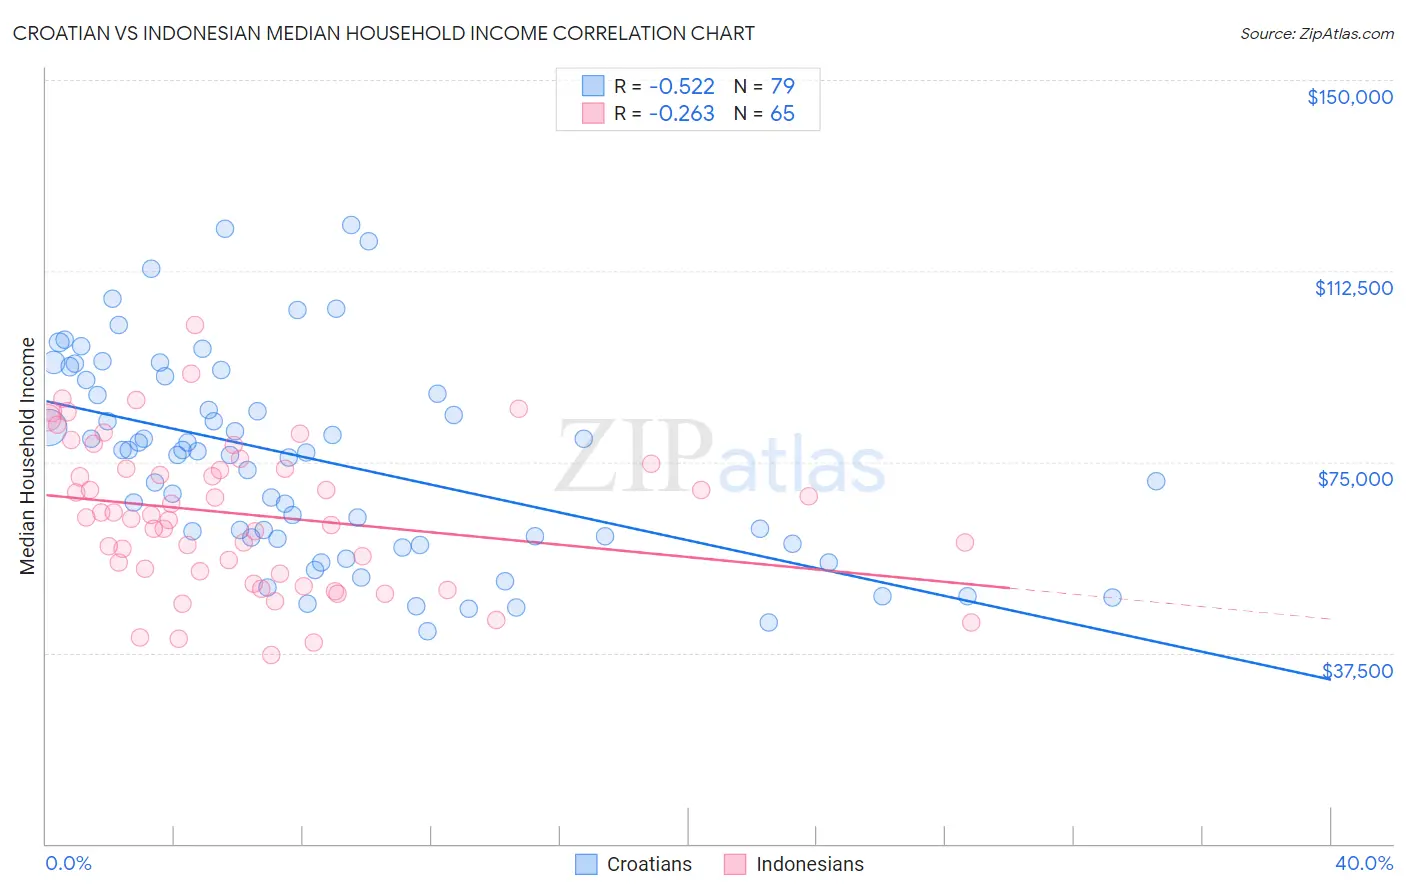 Croatian vs Indonesian Median Household Income